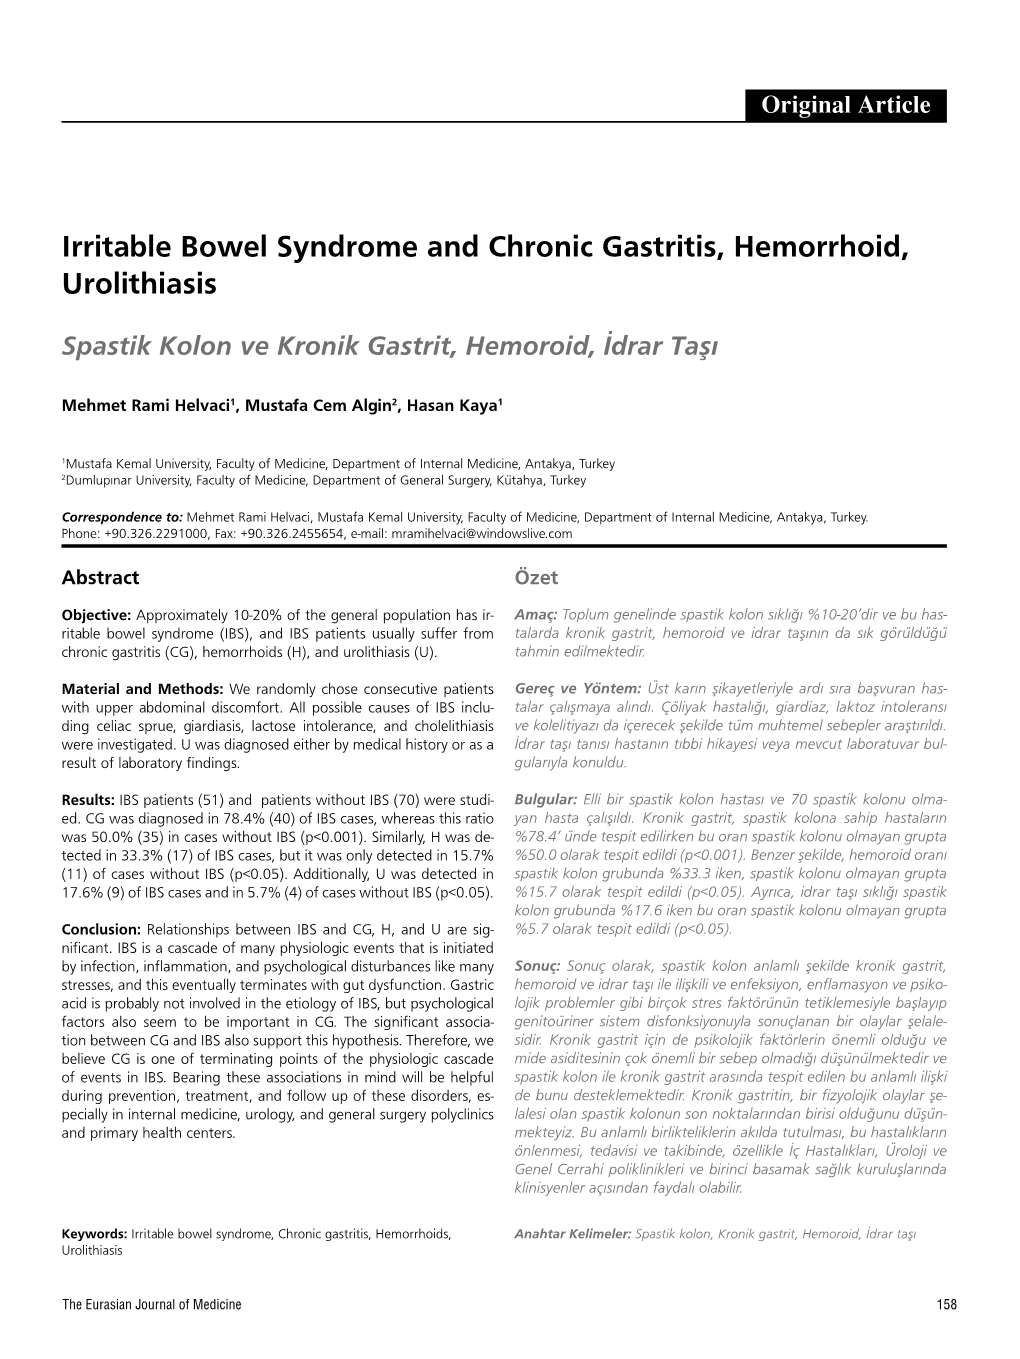 Irritable Bowel Syndrome and Chronic Gastritis, Hemorrhoid, Urolithiasis